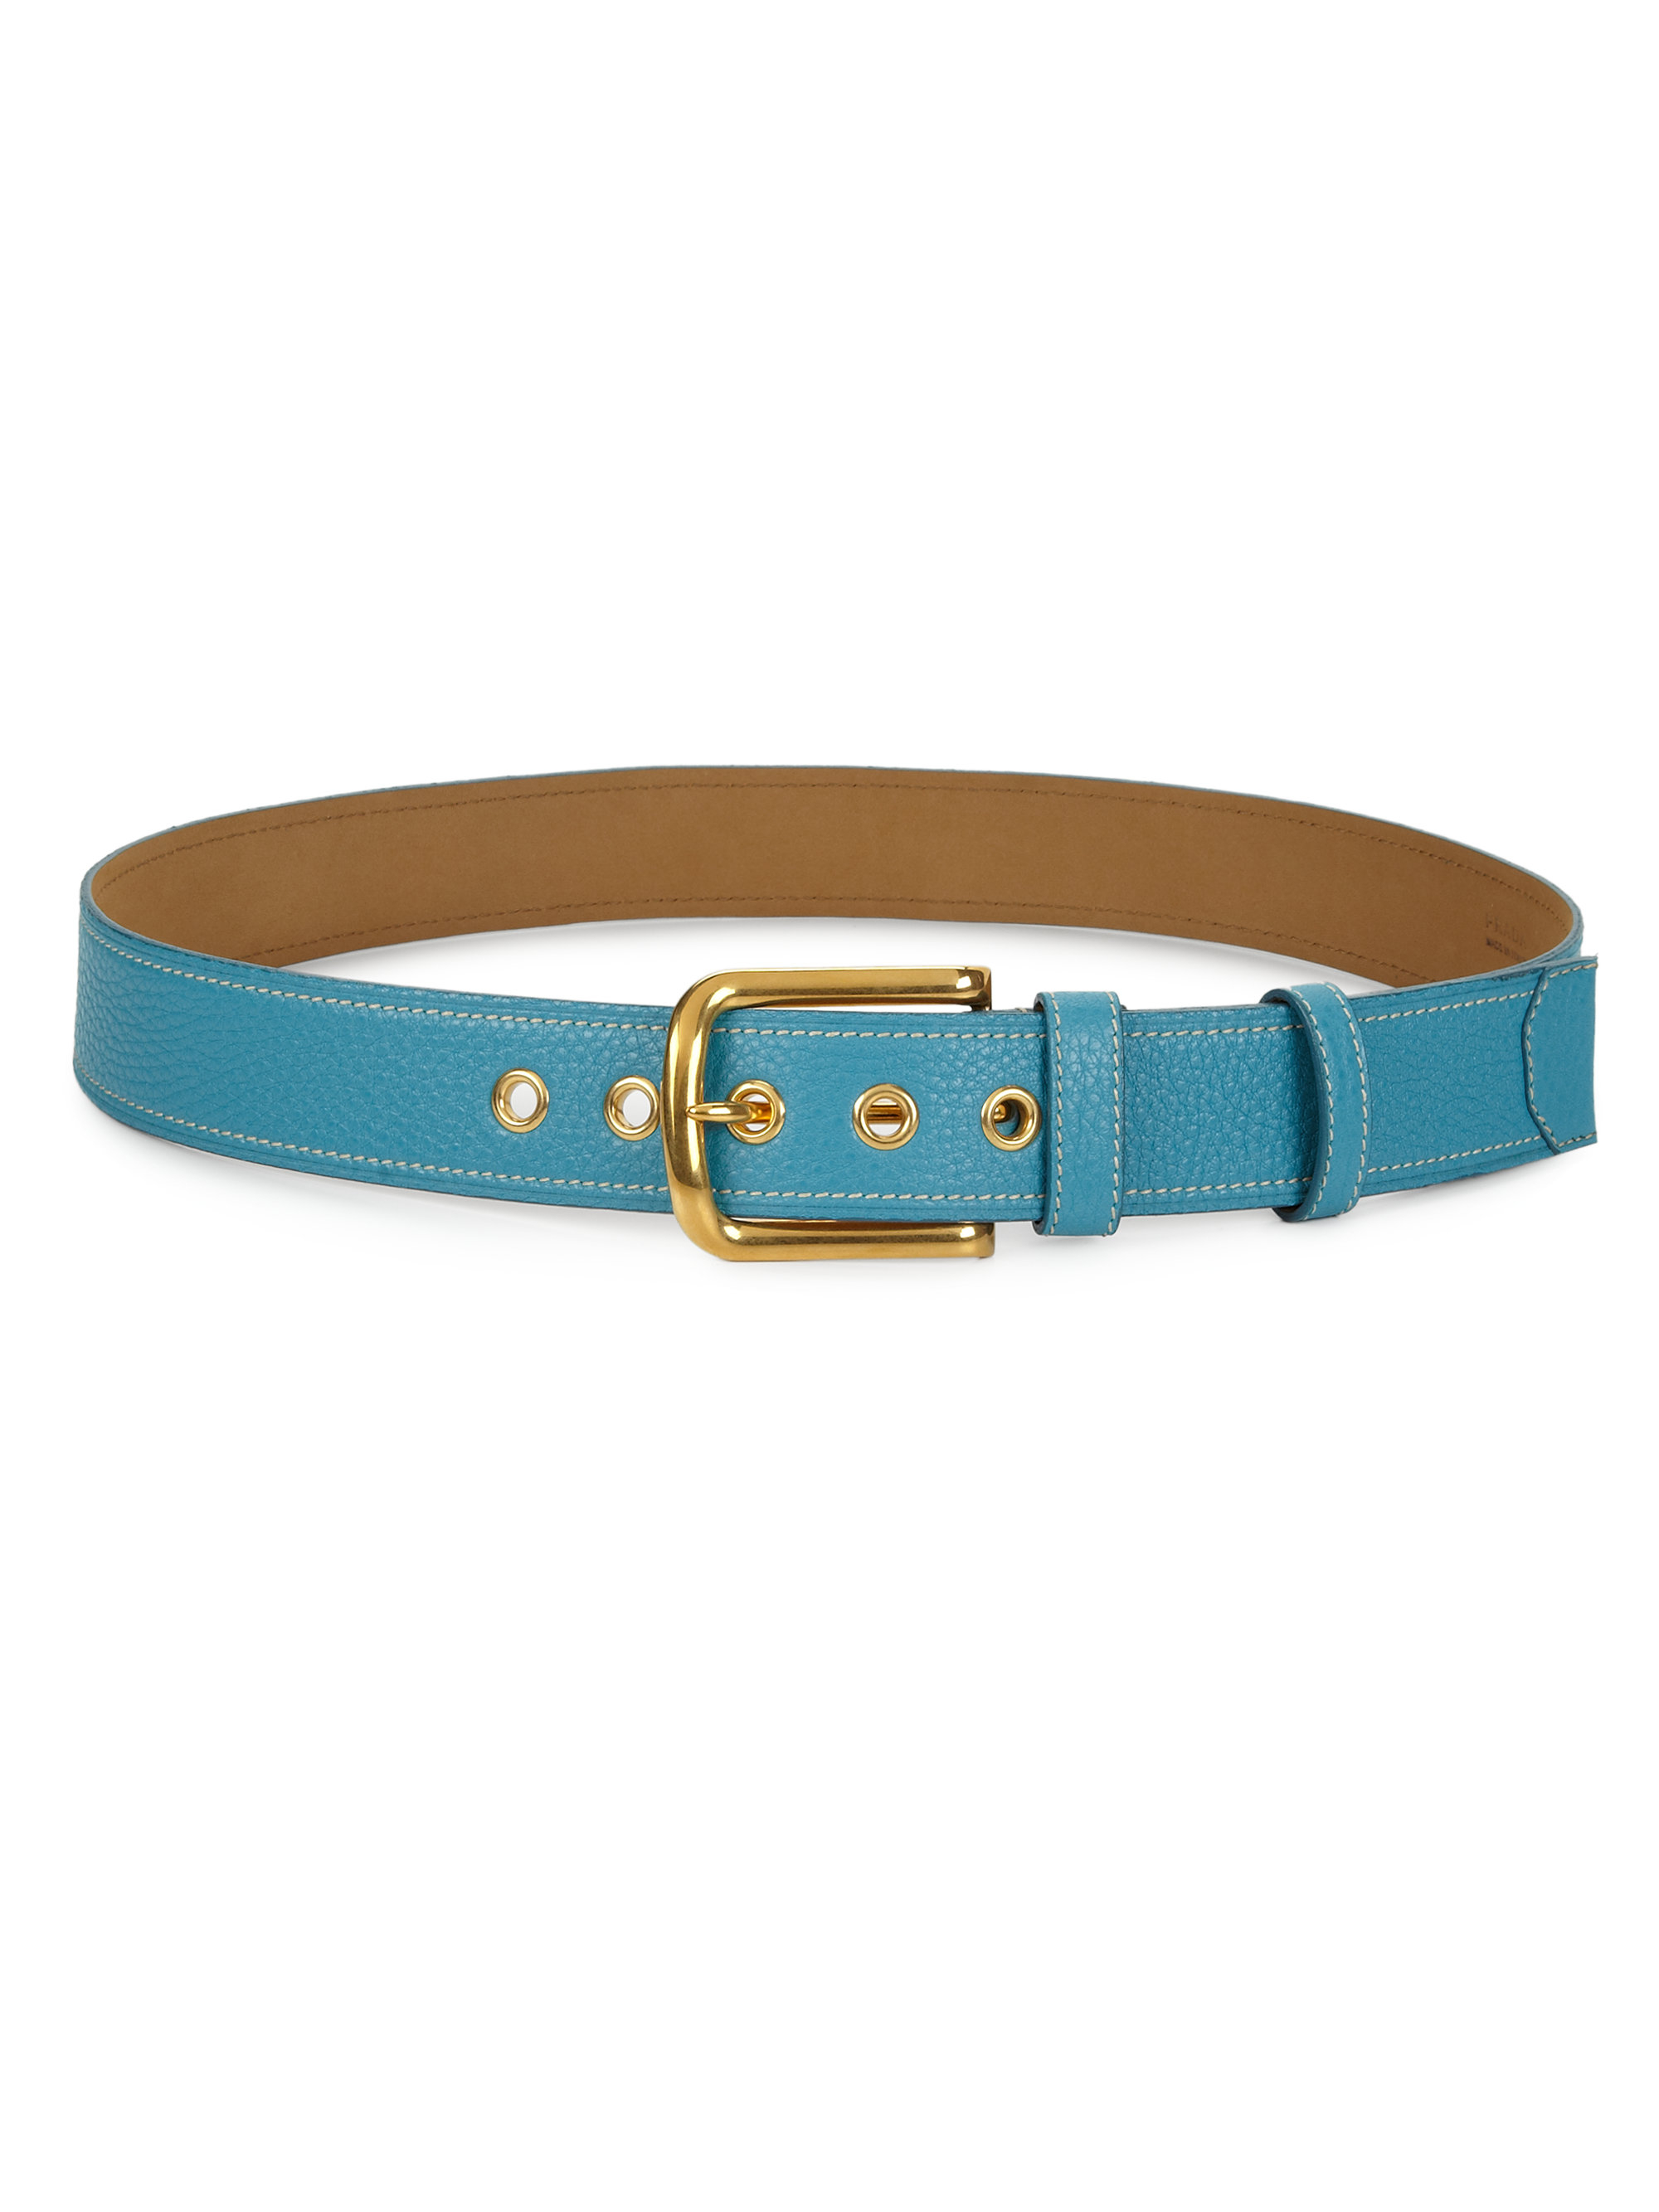 Lyst - Prada Cinture Leather Belt in Blue